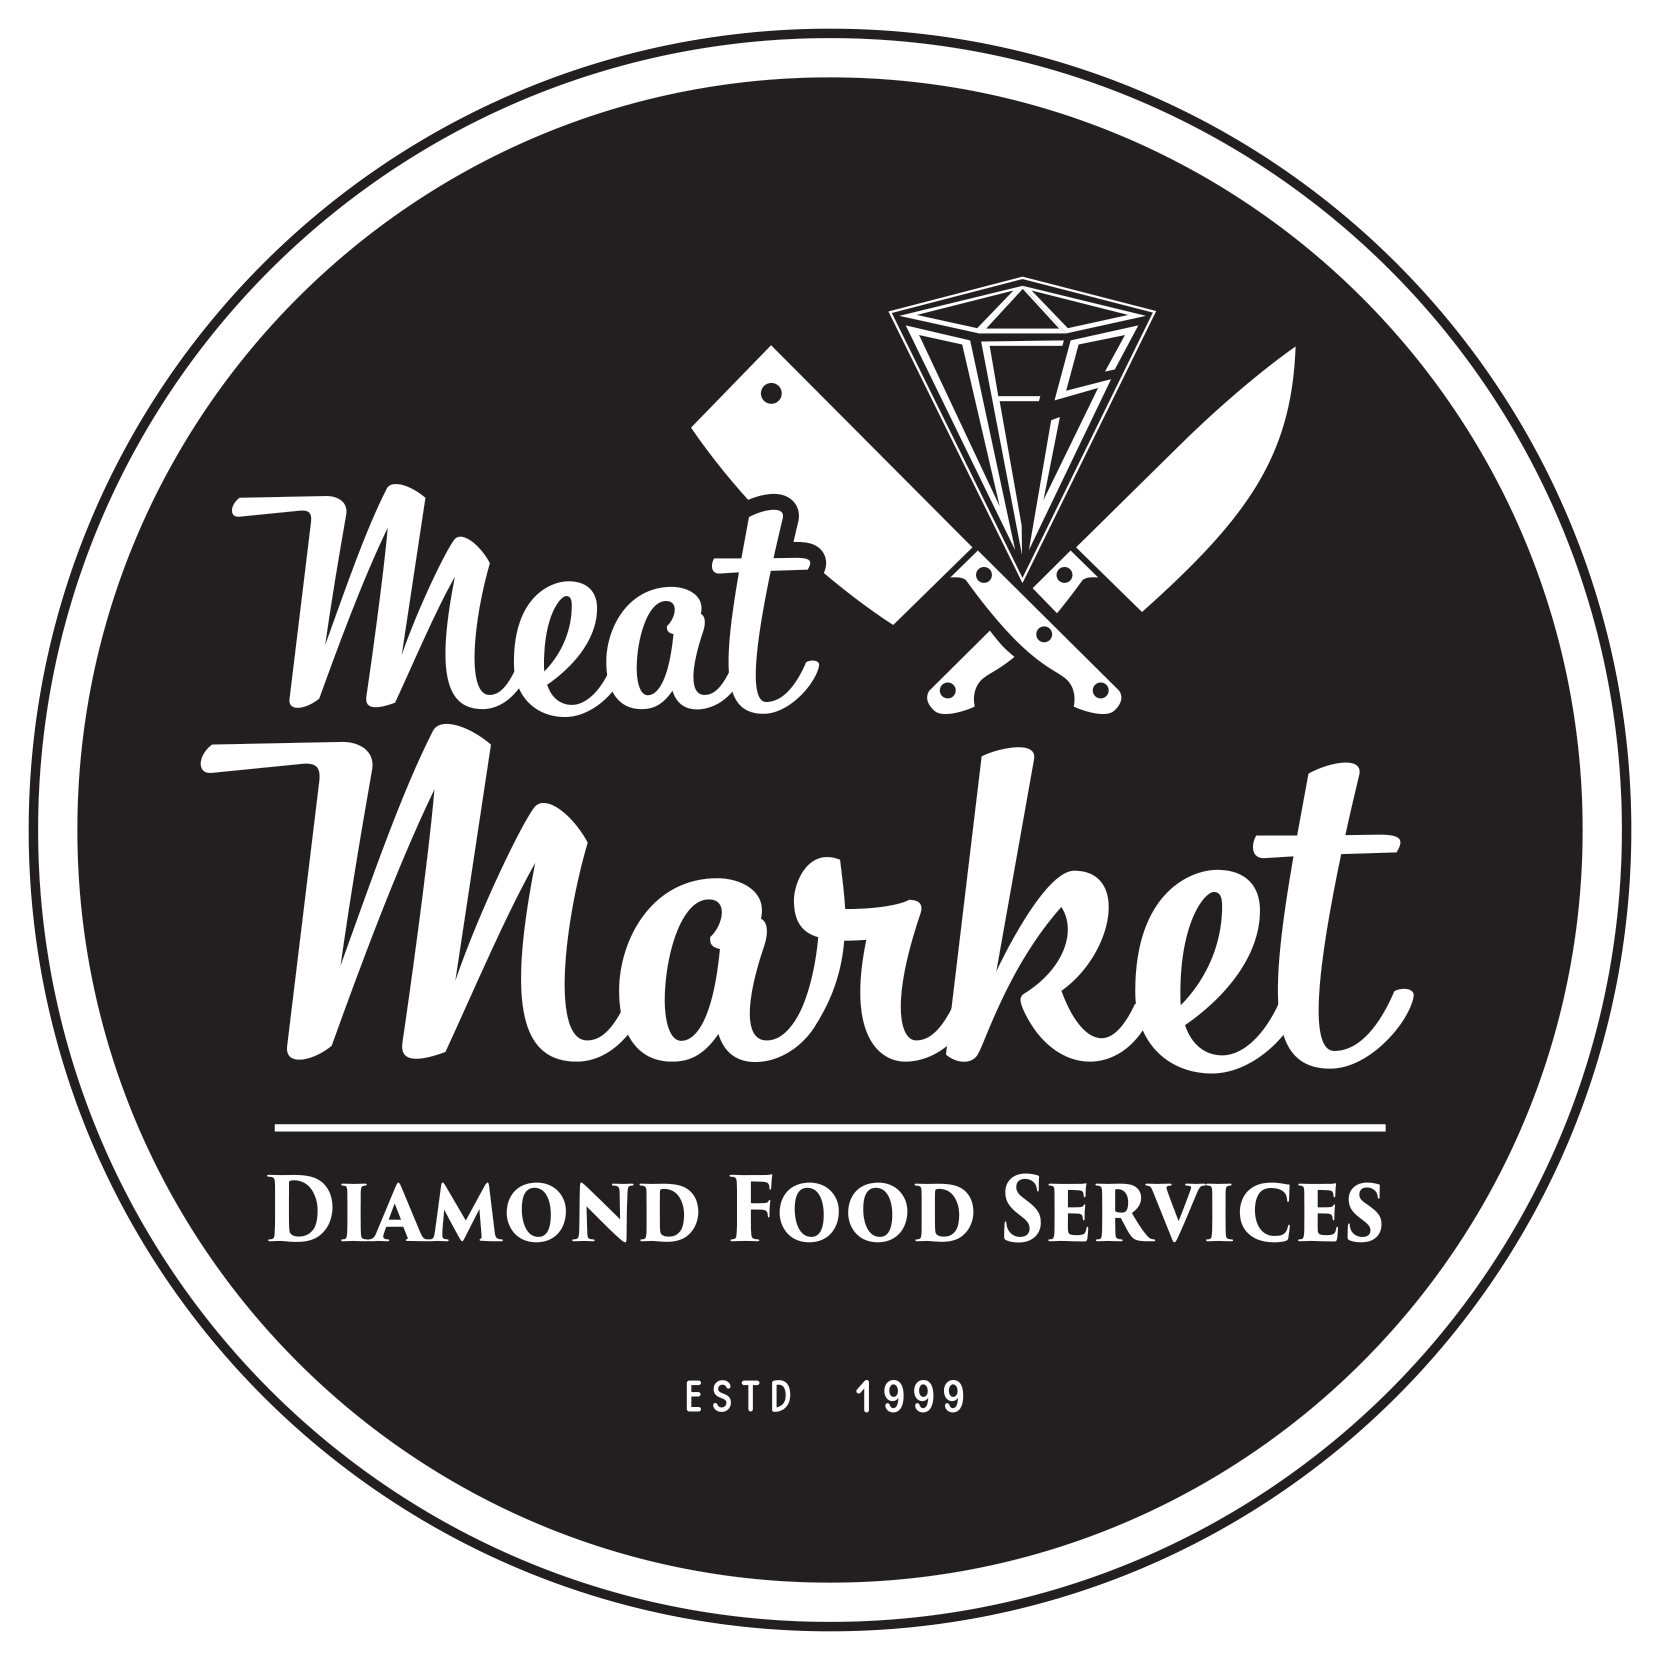 Diamond Food Services